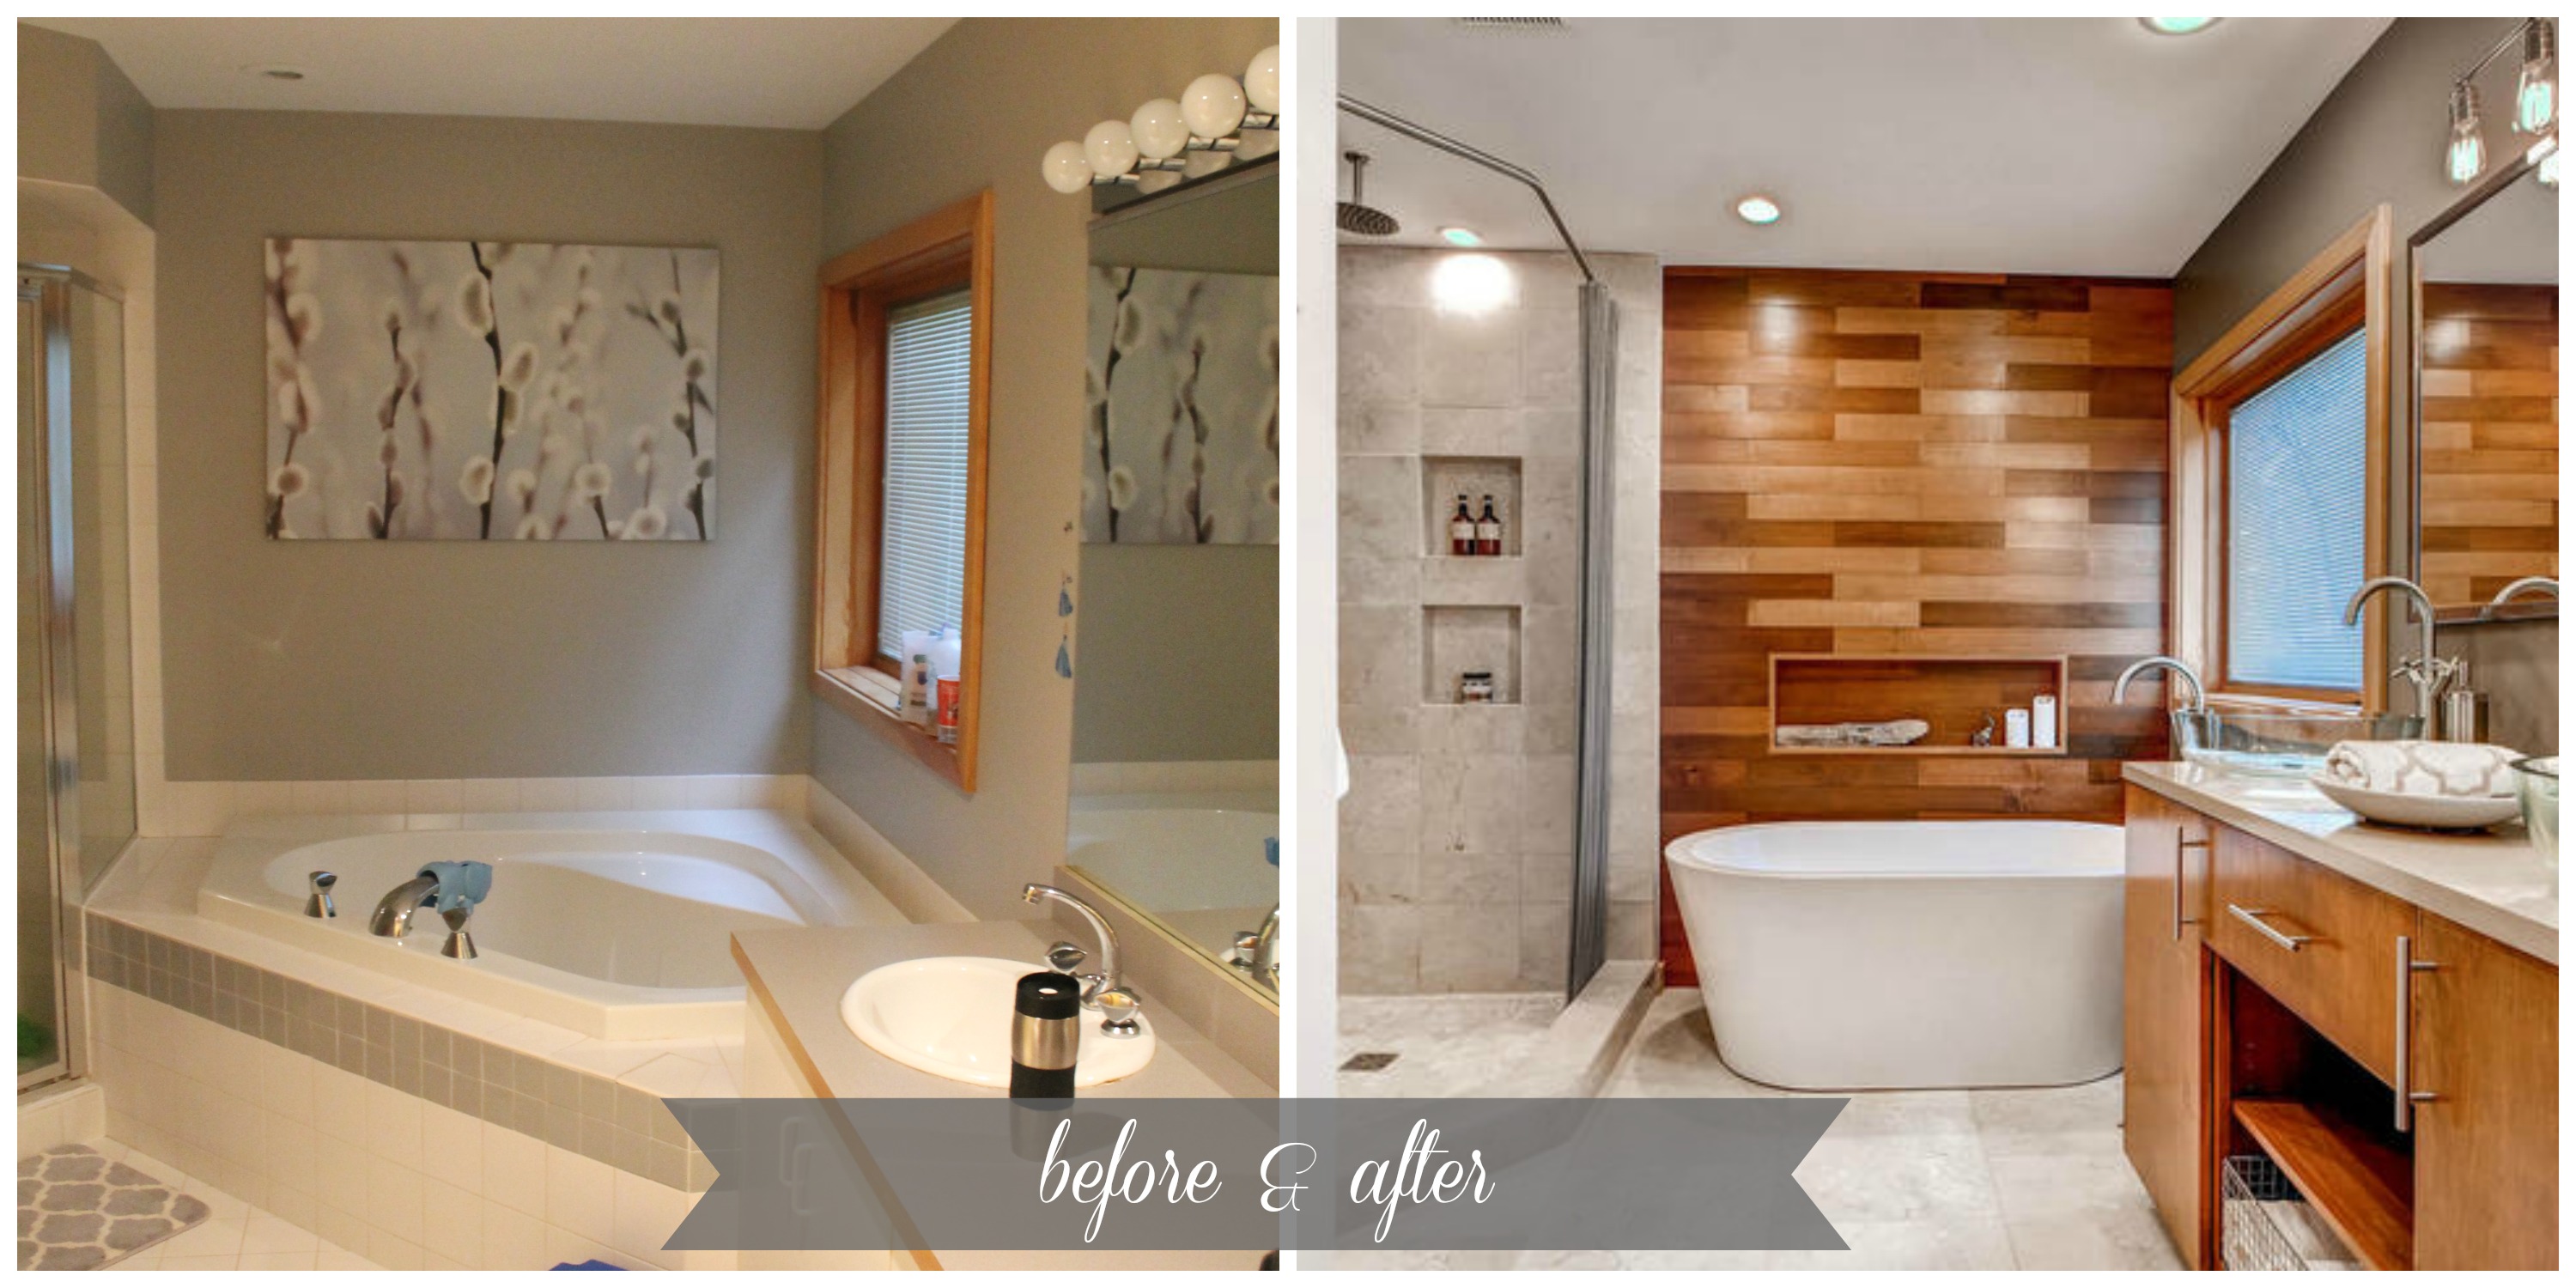 spa like bathroom remodeling ideas | lovelyspaces.com